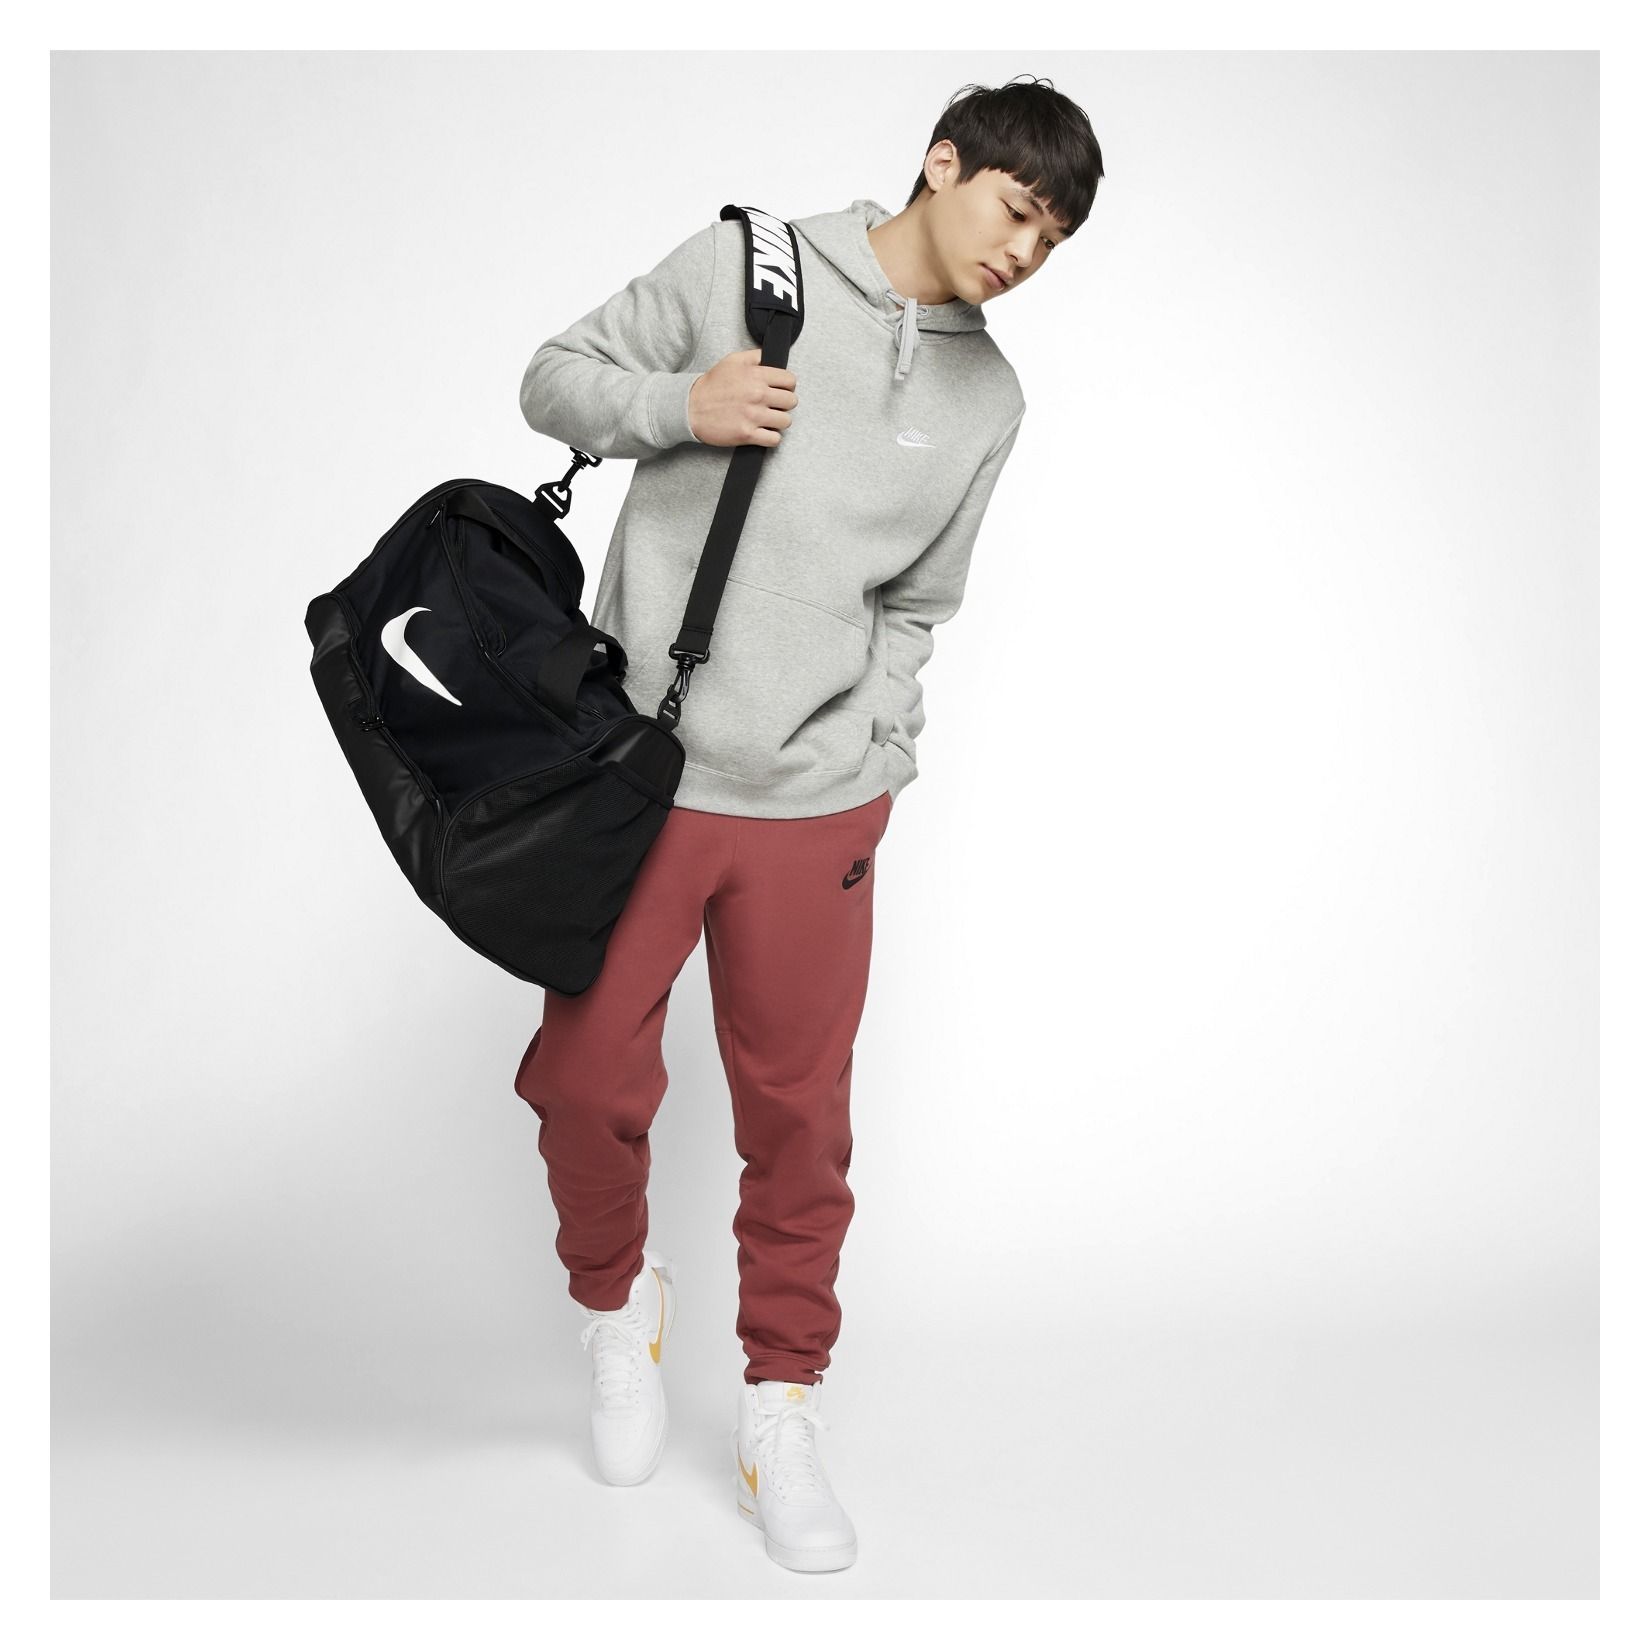 Nike Brasilia M Training Duffel Bag (Medium) - Kitlocker.com